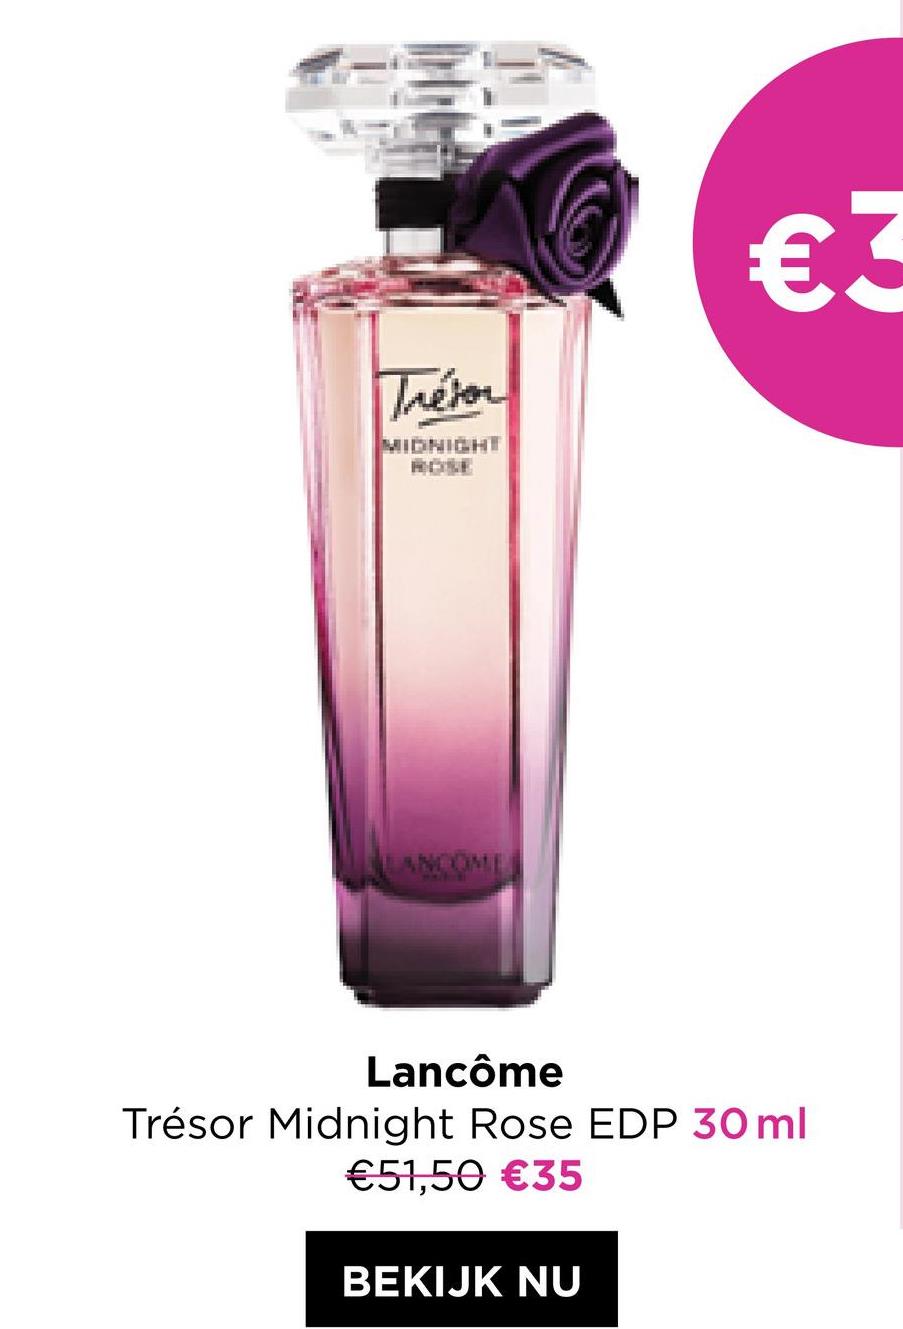 Trésor
MIDNIGHT
€3
Lancôme
Trésor Midnight Rose EDP 30 ml
€51,50 €35
BEKIJK NU